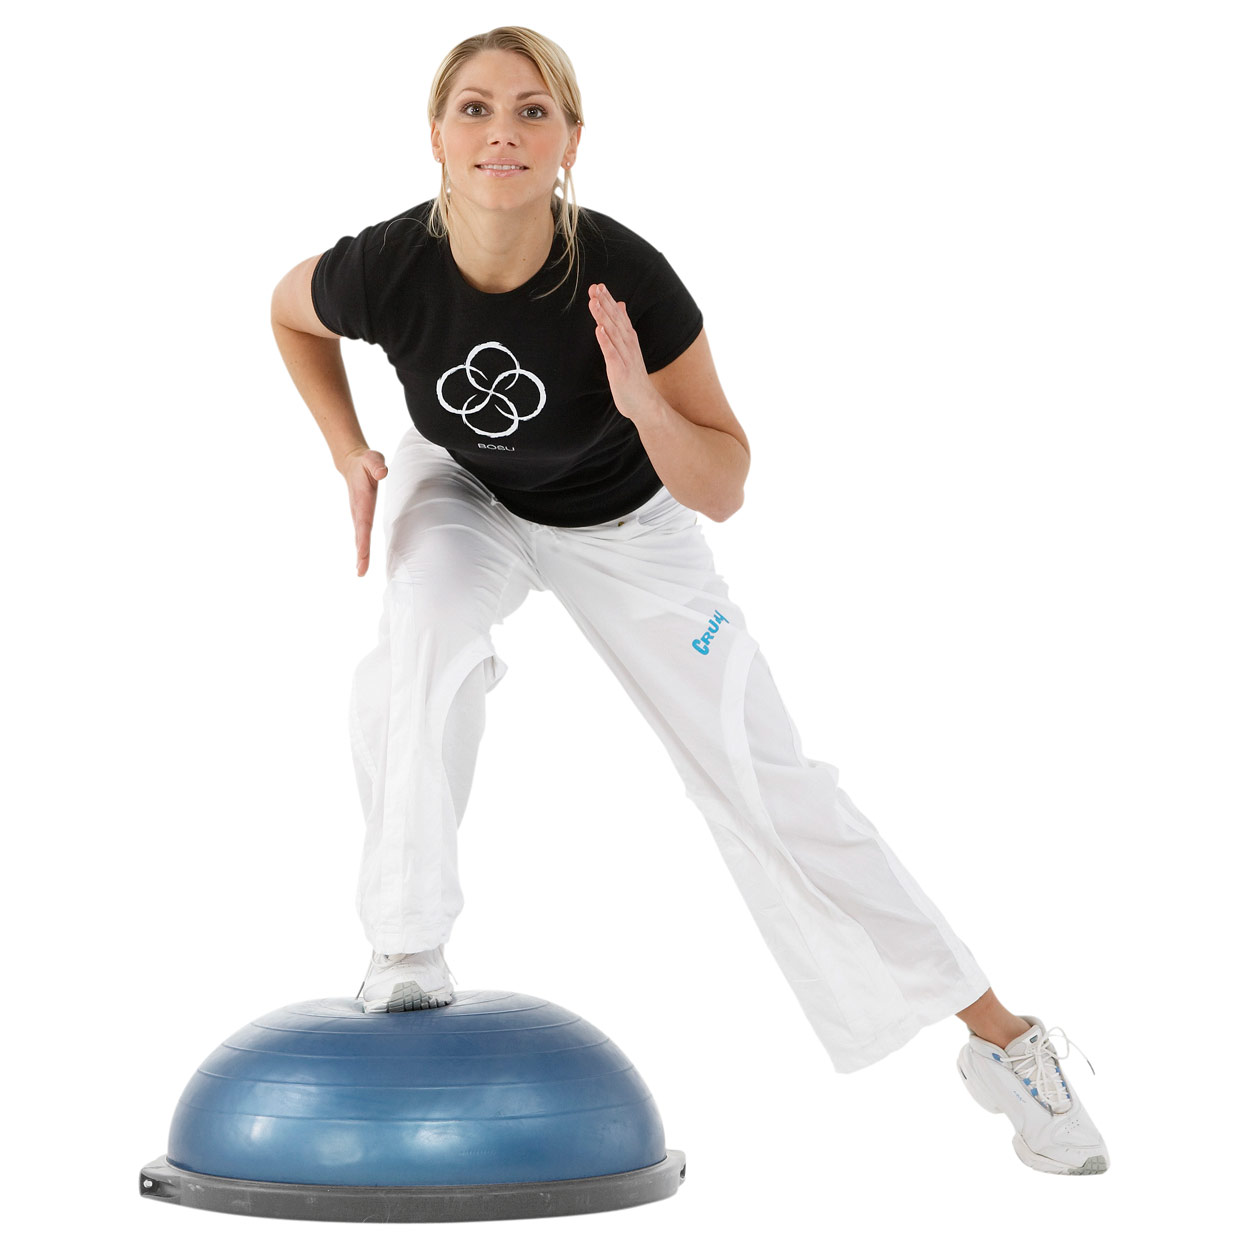 BOSU Balance Trainer Pro Edition for intensive training.